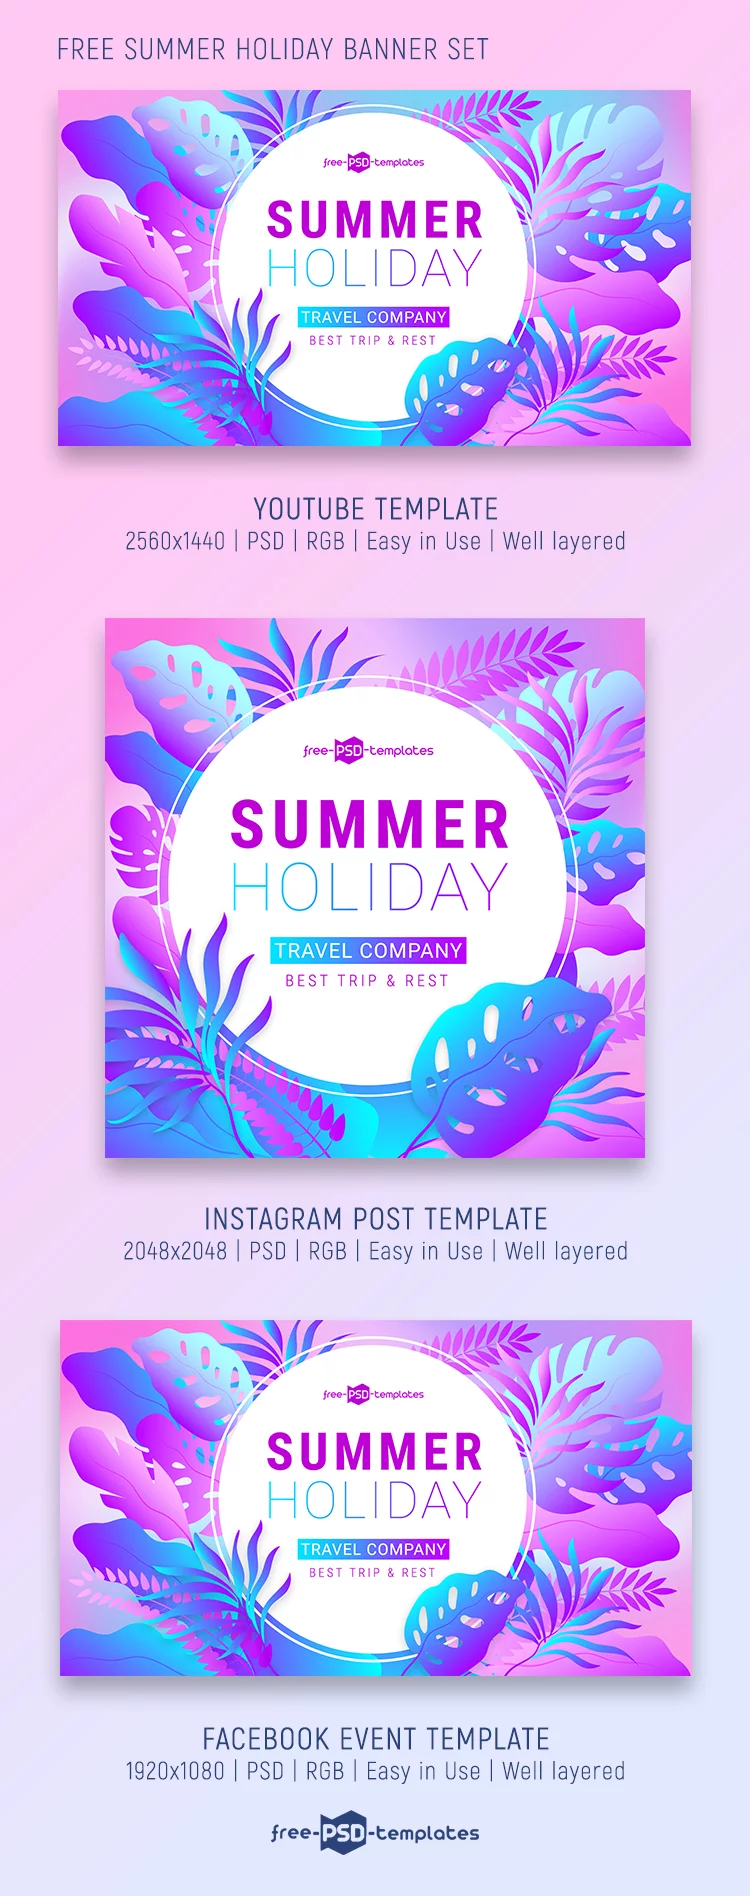 Free Summer Holiday Banner Set